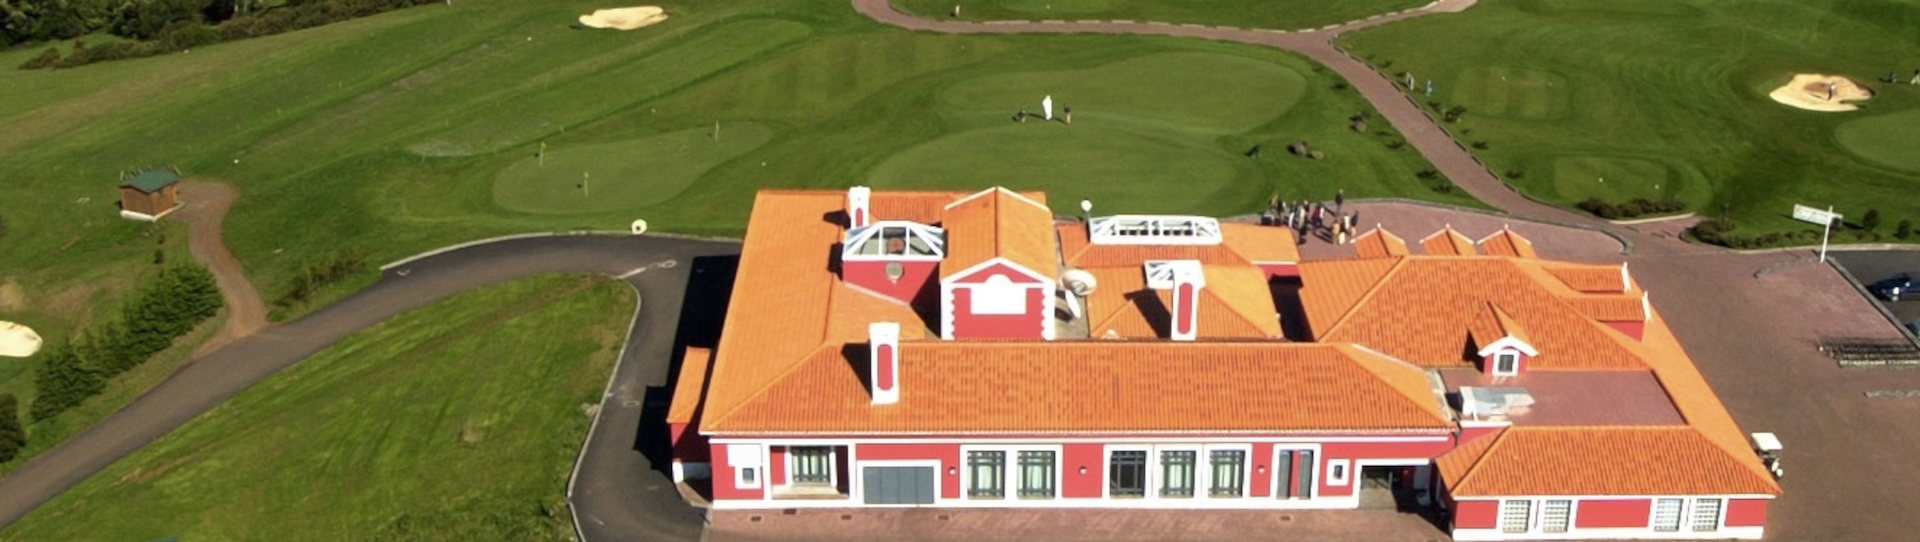 Portugal golf holidays - Santo da Serra Esperience w/ Buggy Included - Photo 2